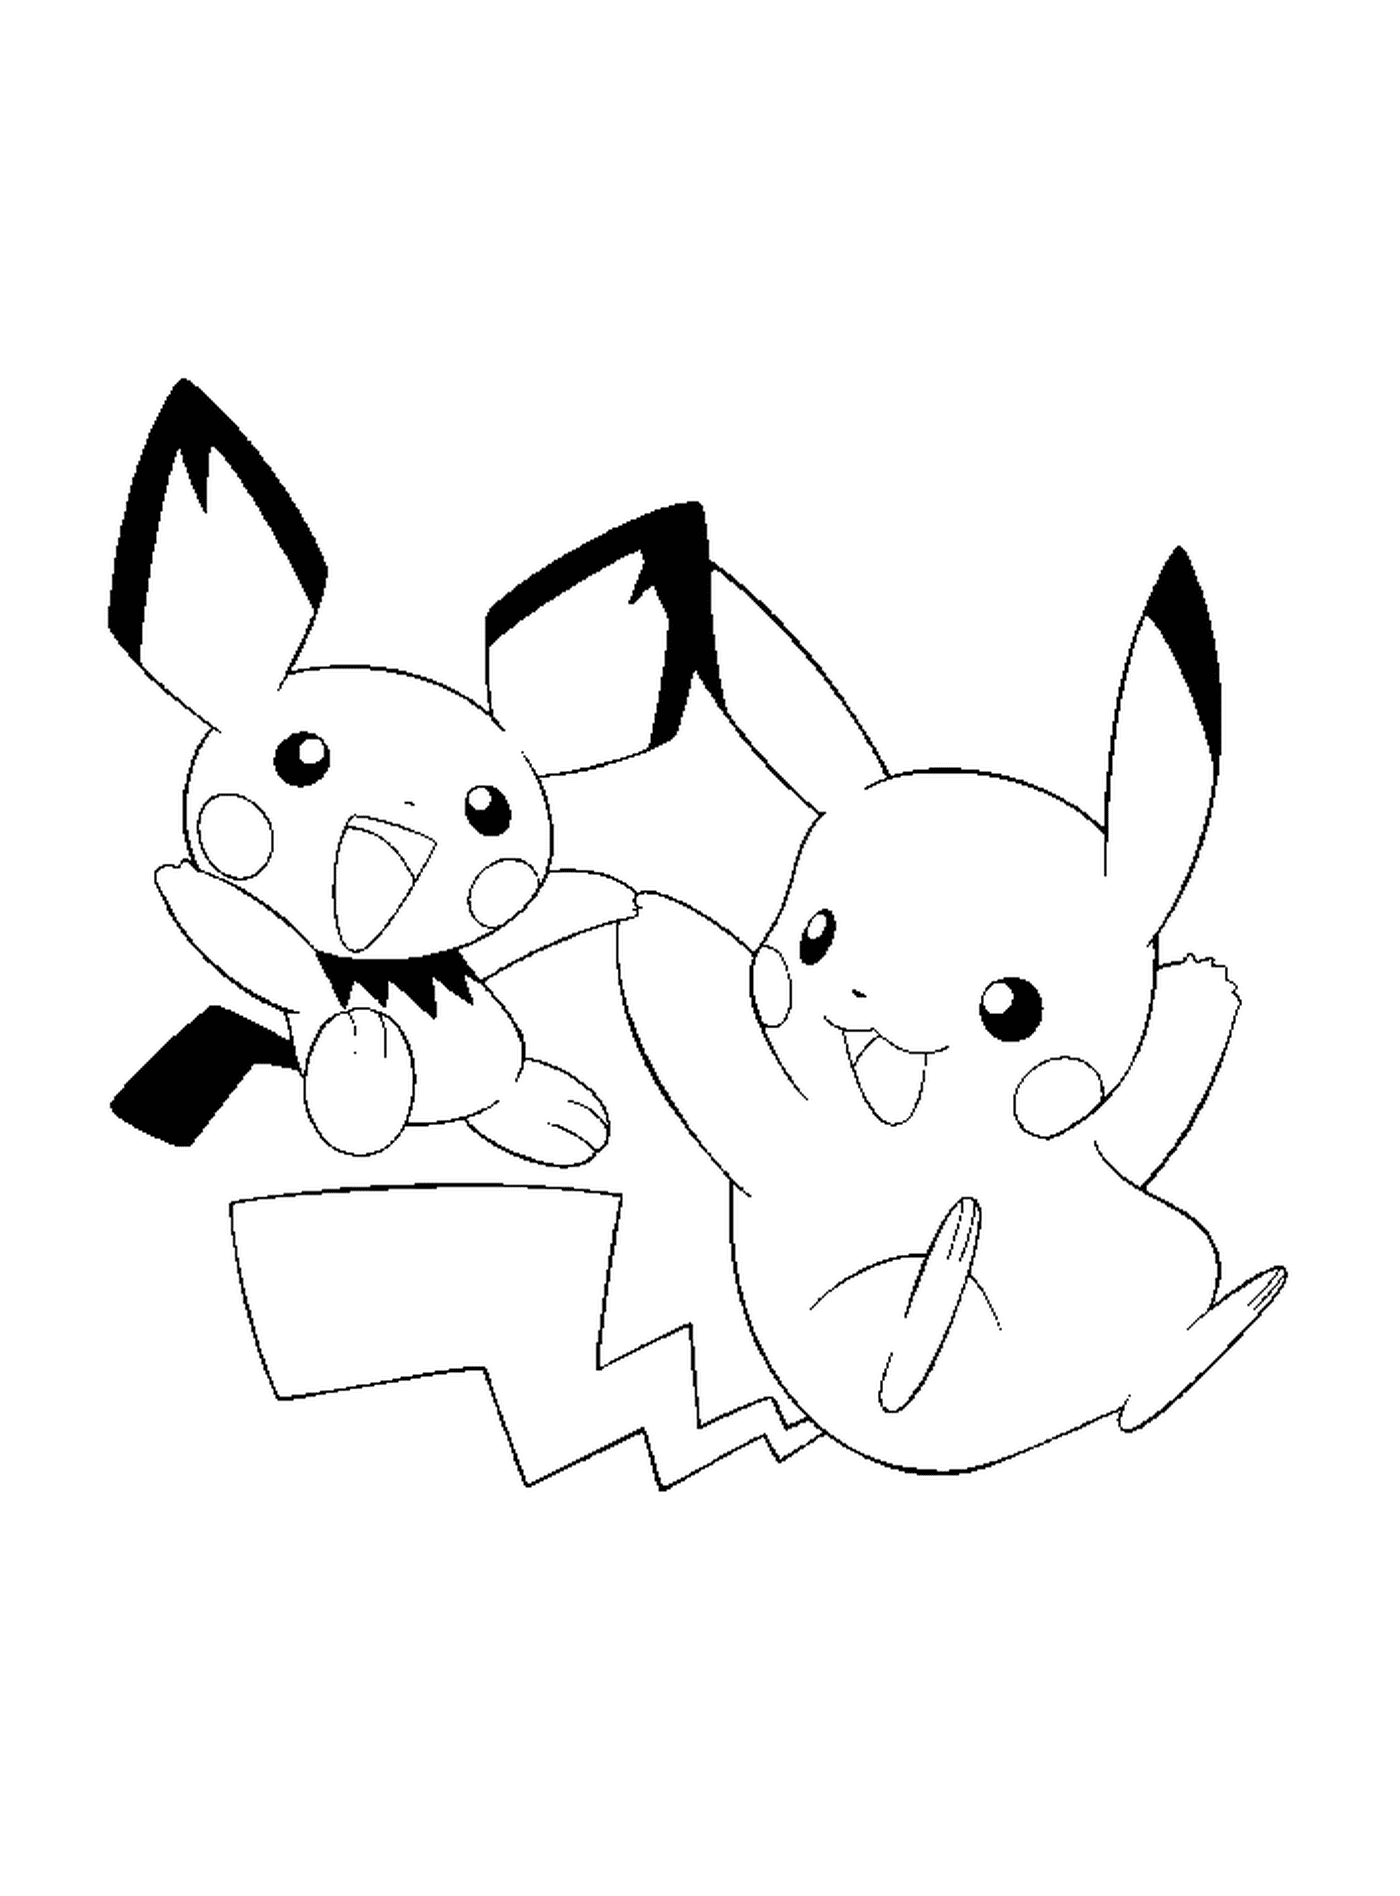  Pikachu e Pichu, amigos inseparáveis 